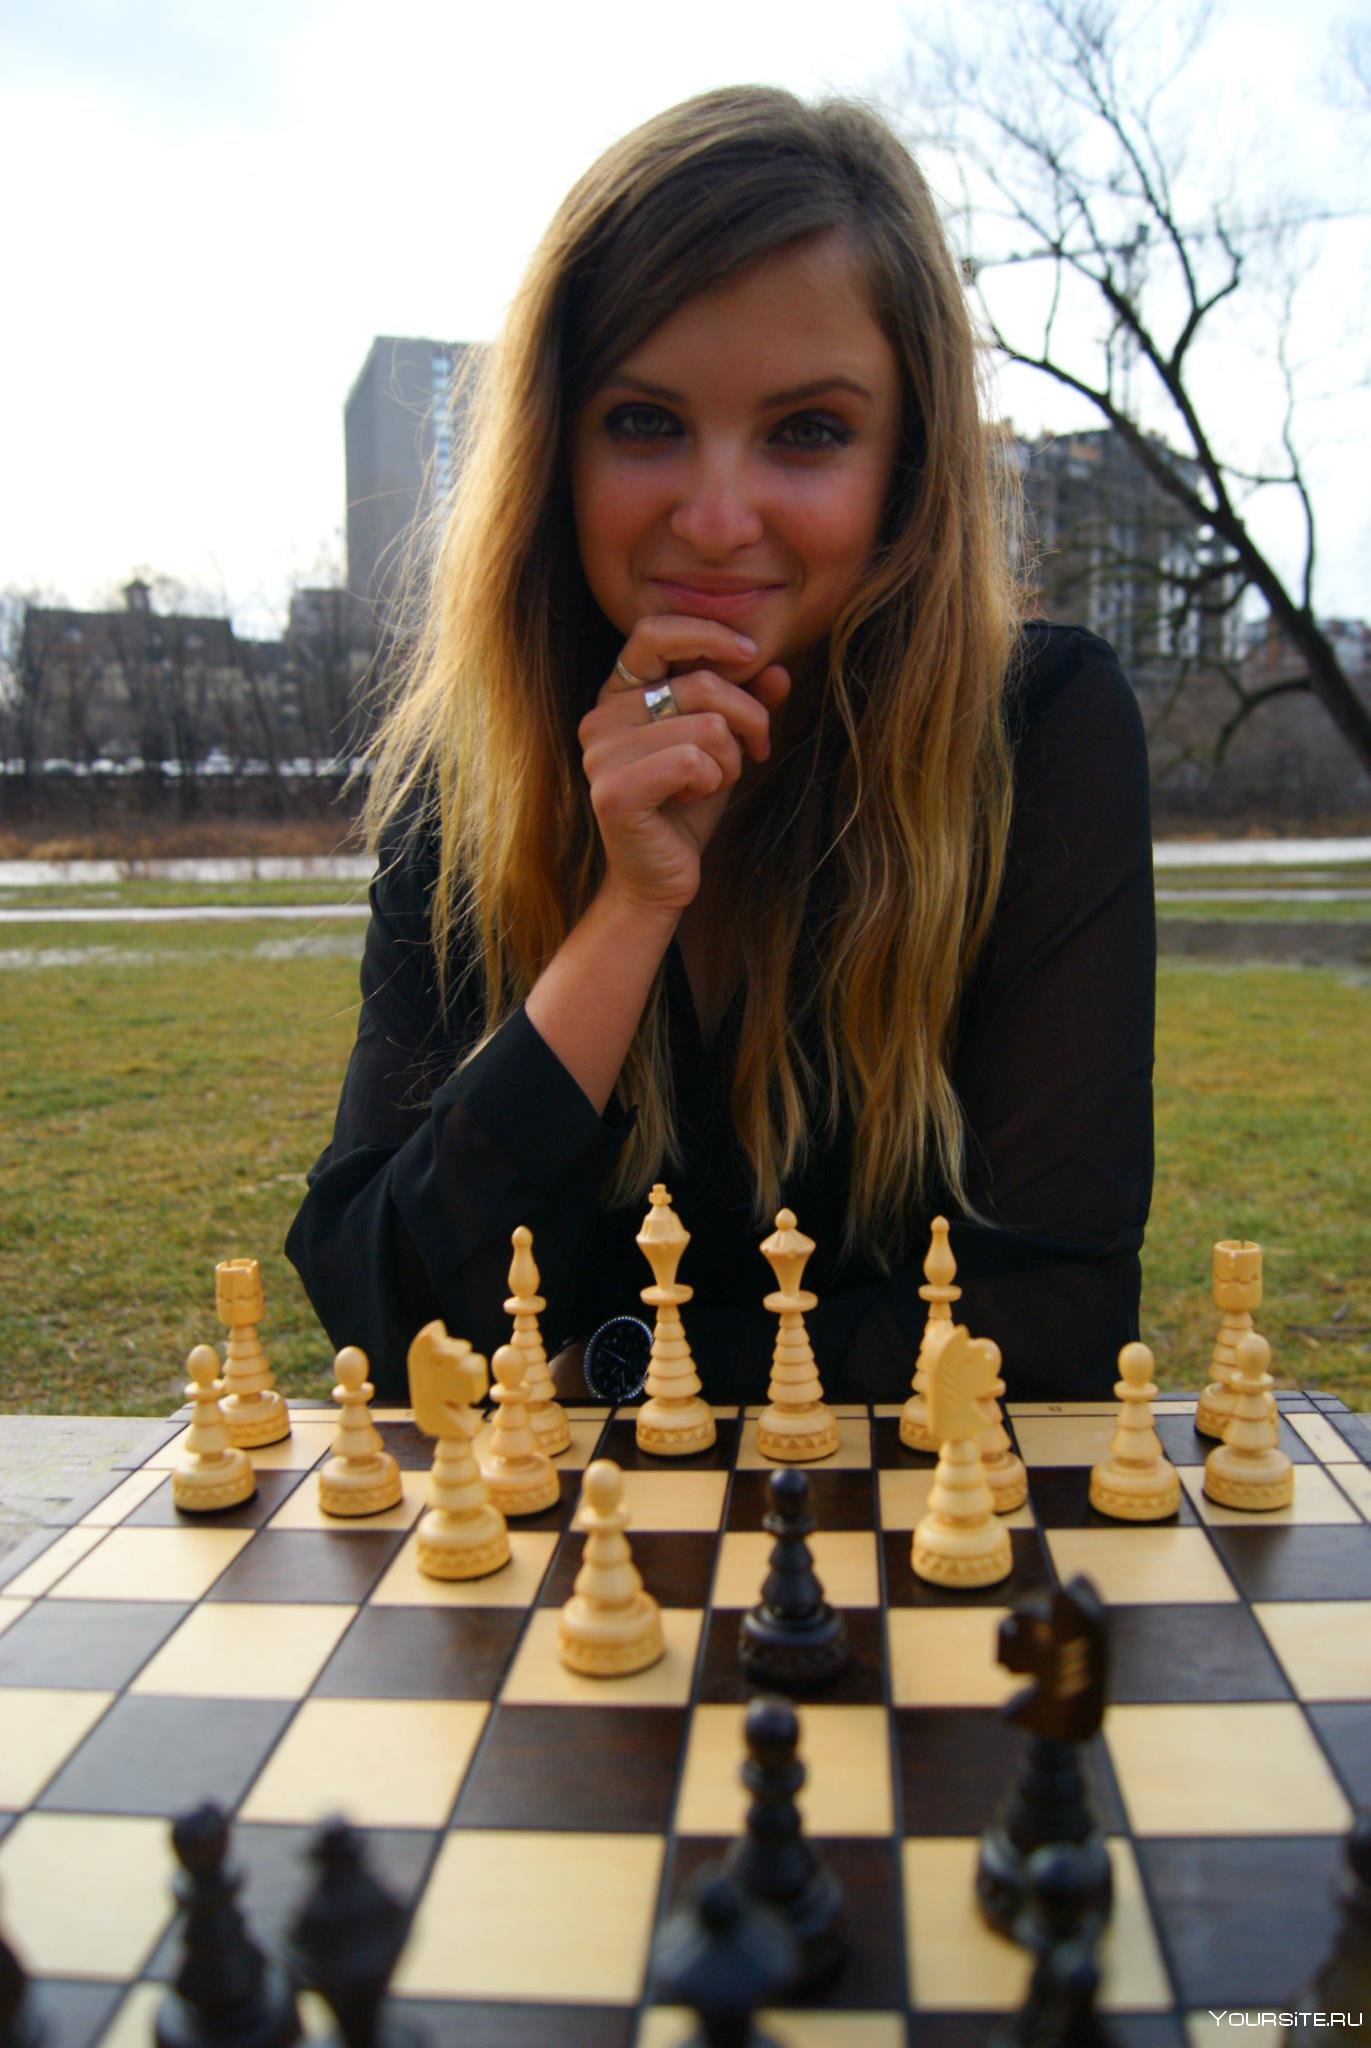 Джессика басланд шахматы